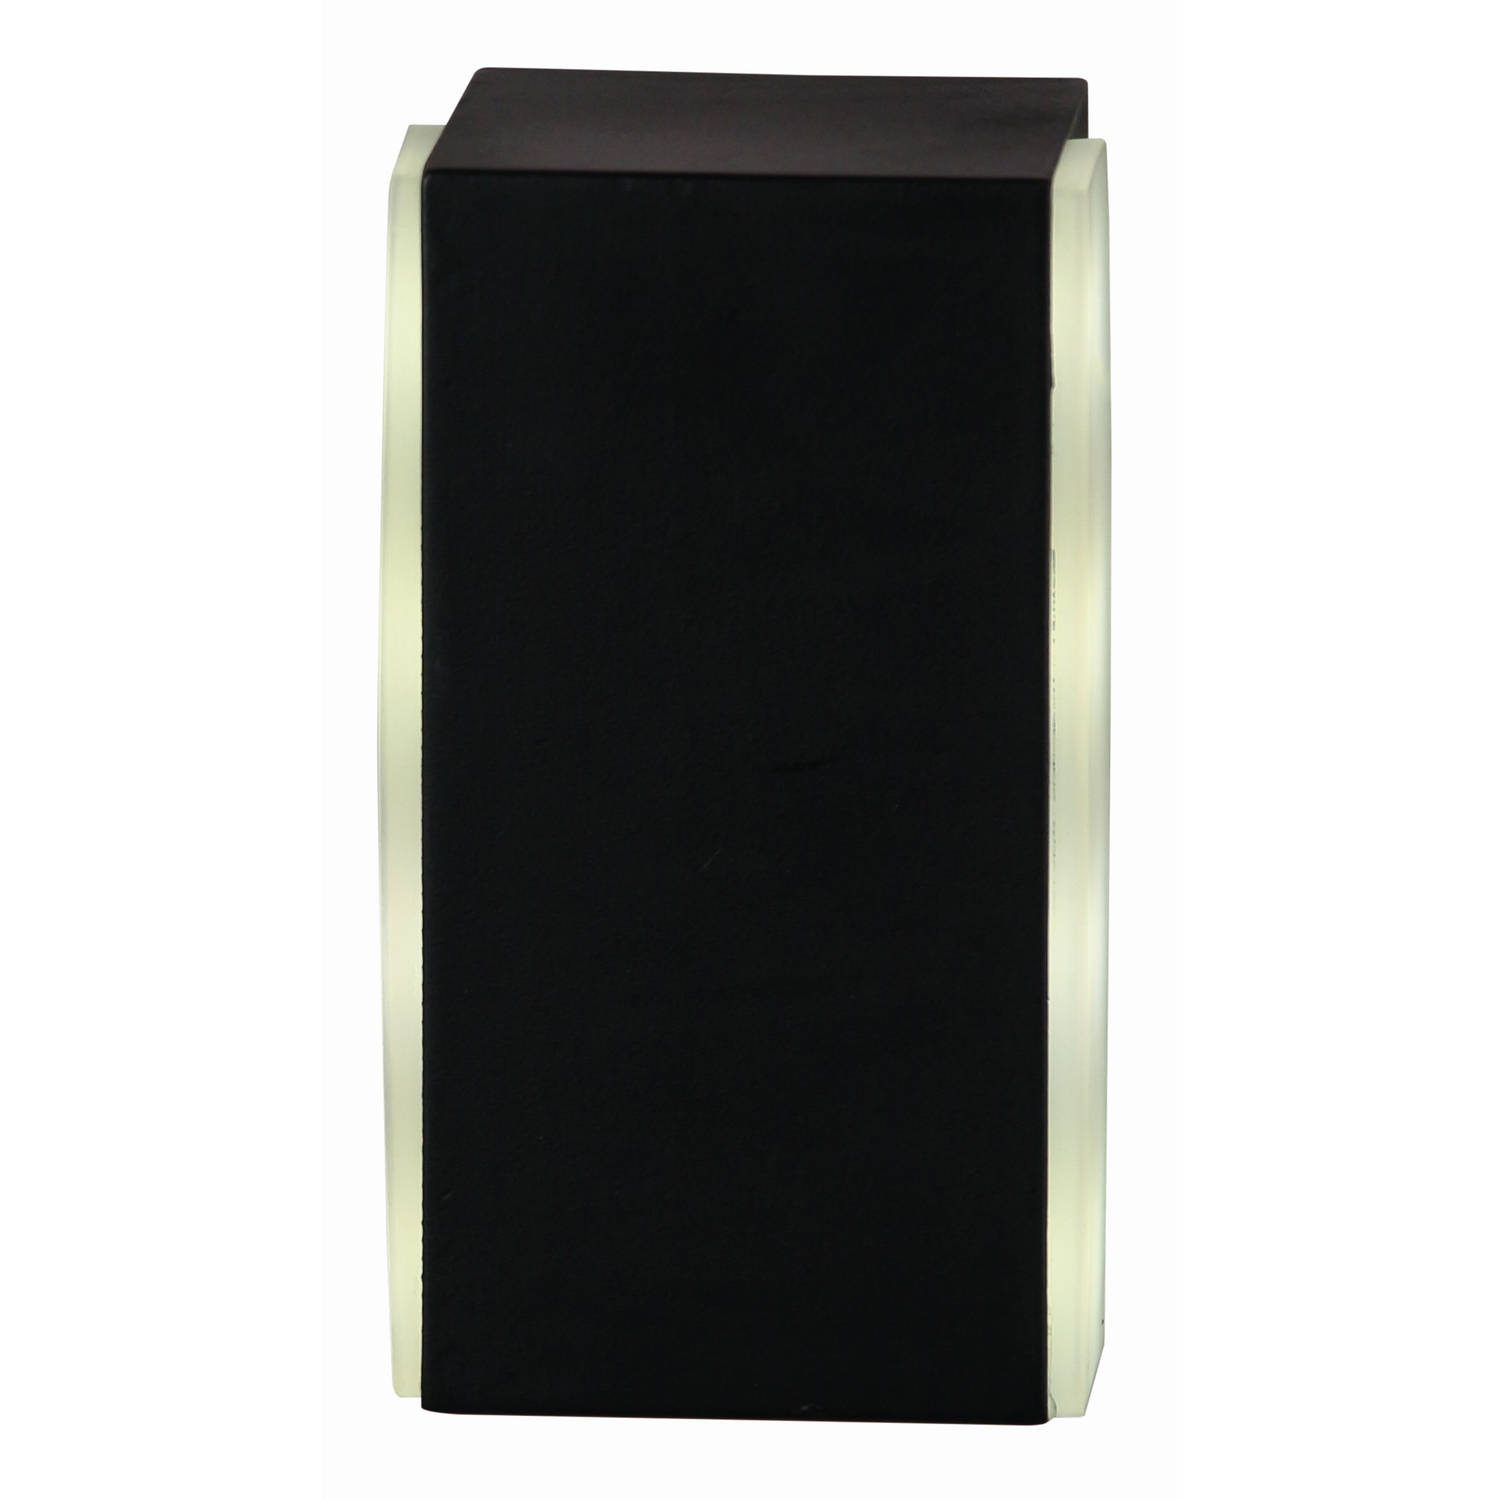 Luxform Zwarte wandspot Cube op accu 23069